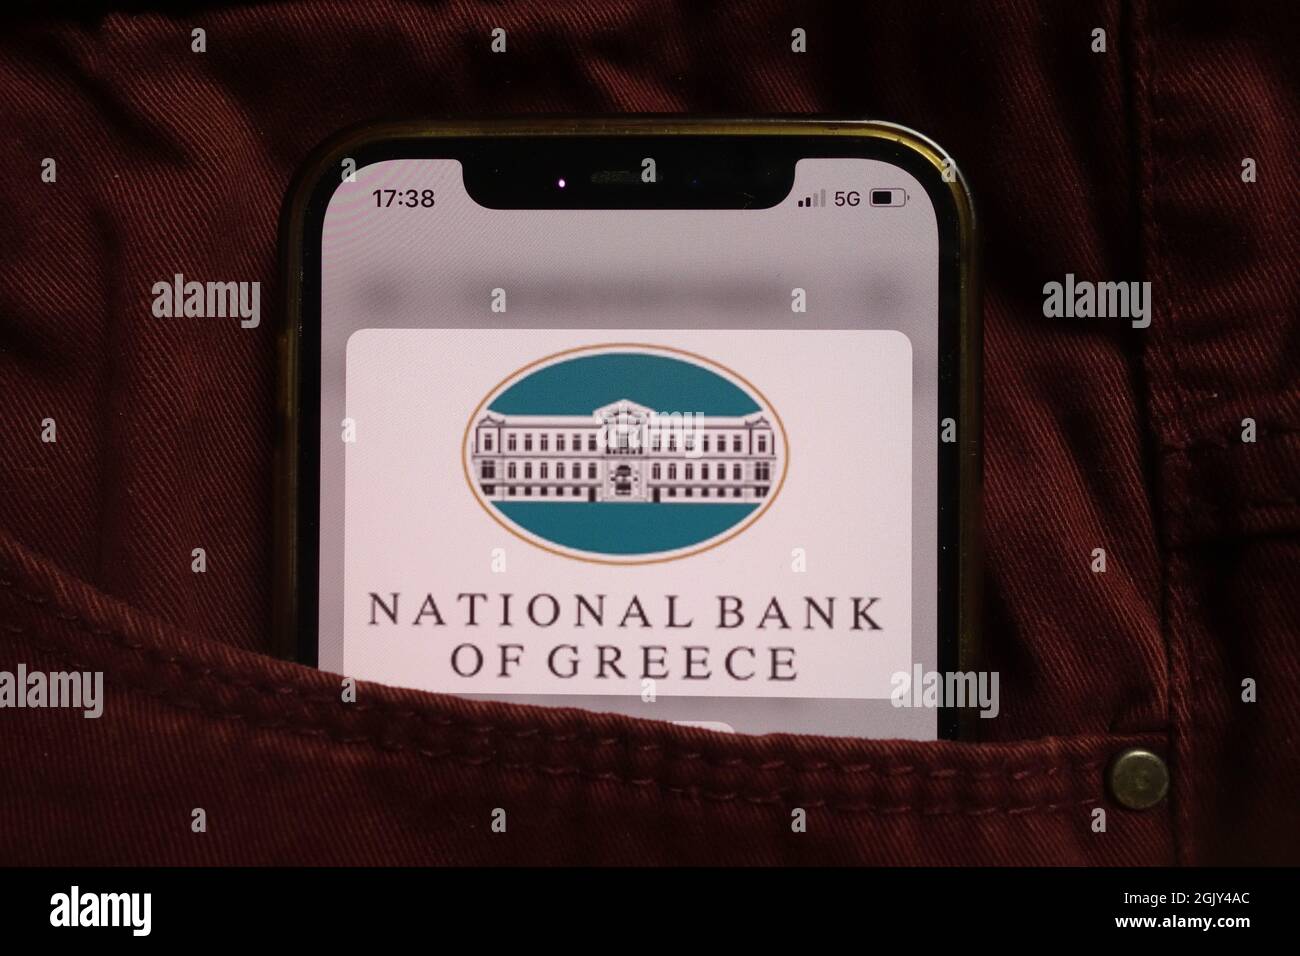 KONSKIE, POLAND - September 04, 2021: National Bank of Greece NBG logo displayed on mobile phone hidden in jeans pocket Stock Photo